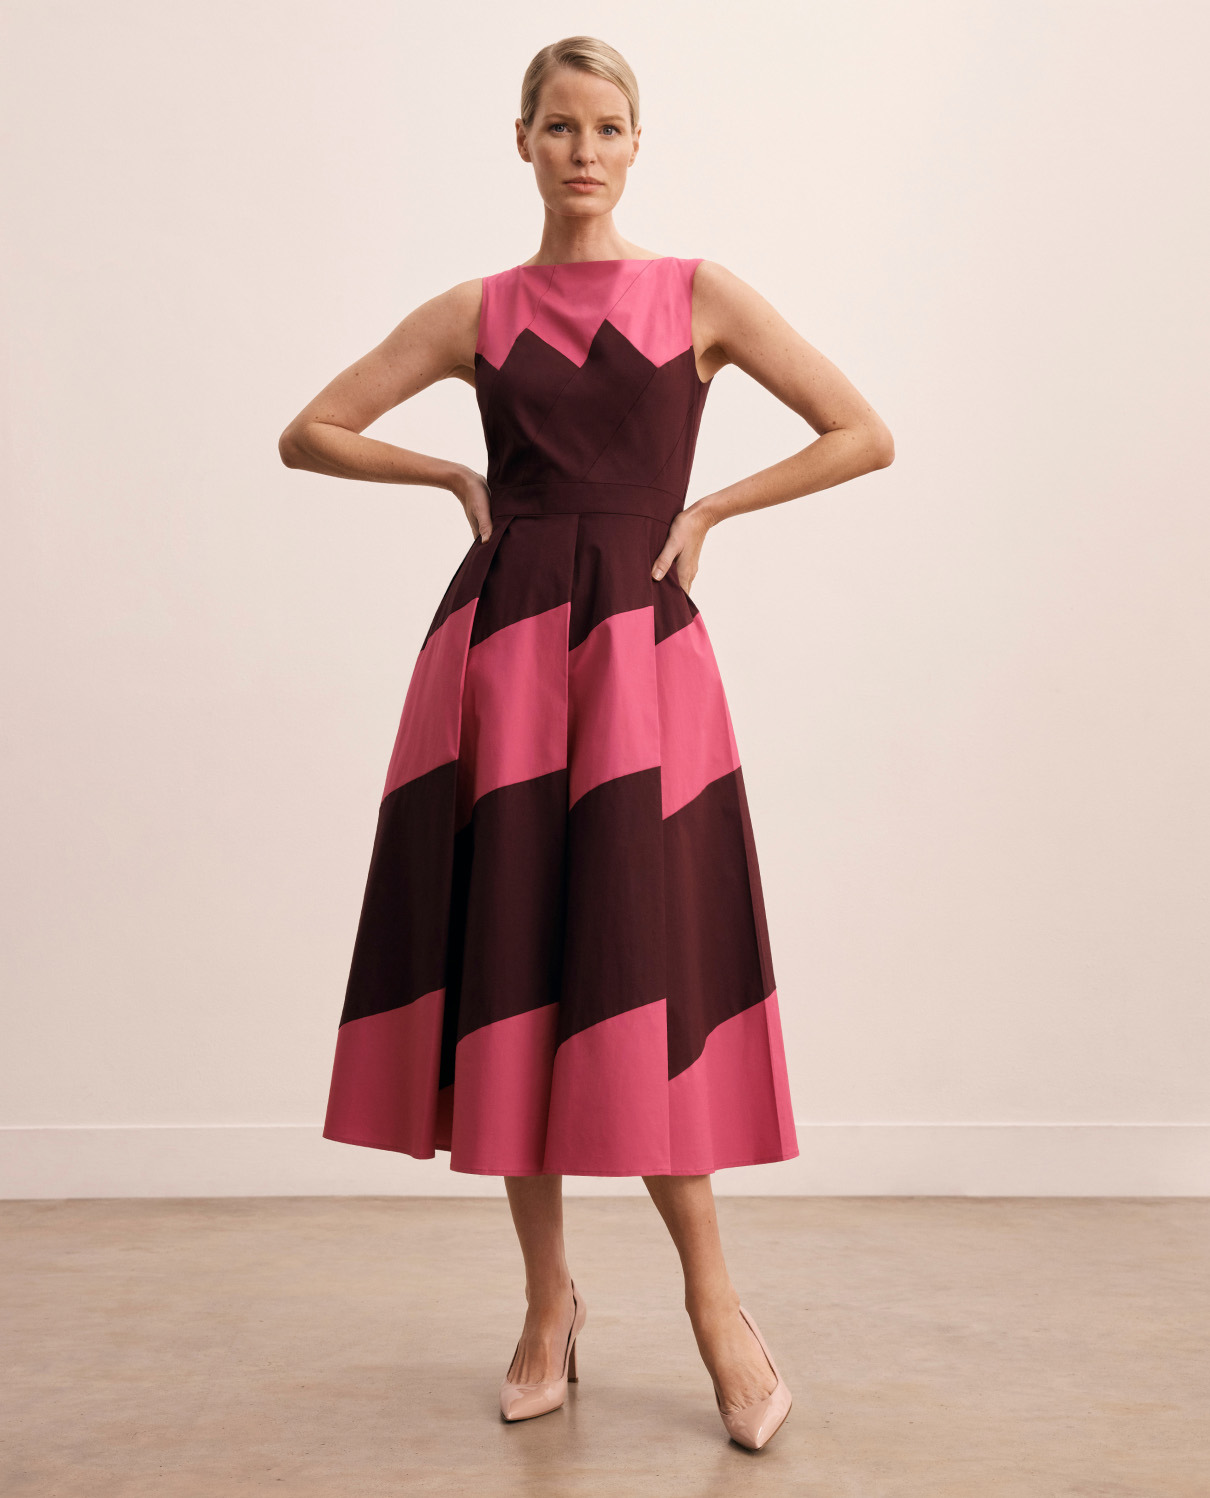 Model wearing berry pink Verania dress